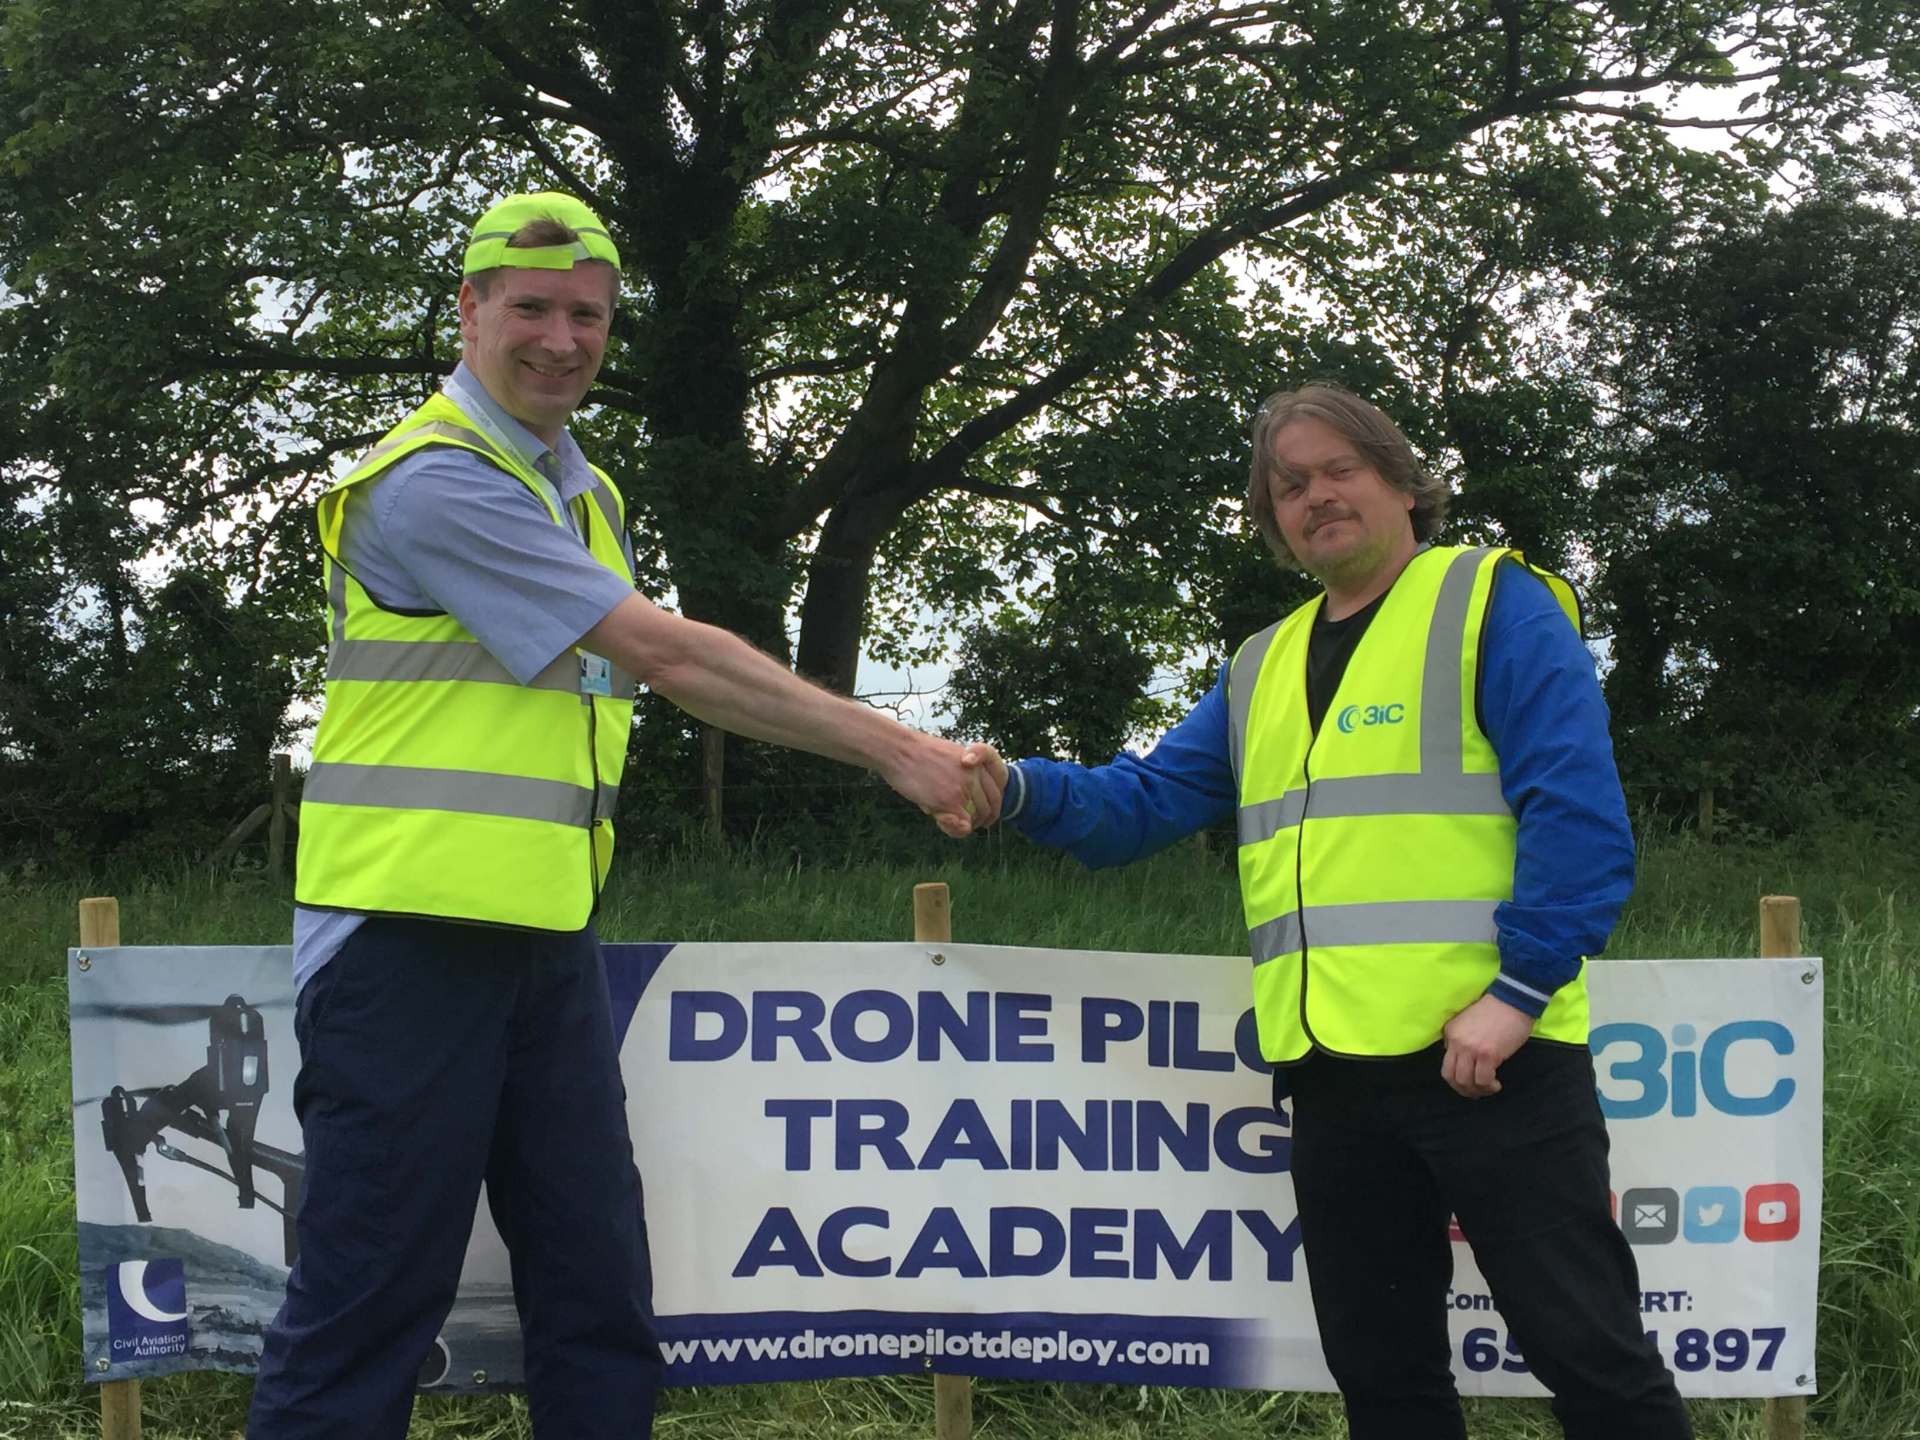 Drone Pilot Training Academy, Drone Pilot Training Northern Ireland